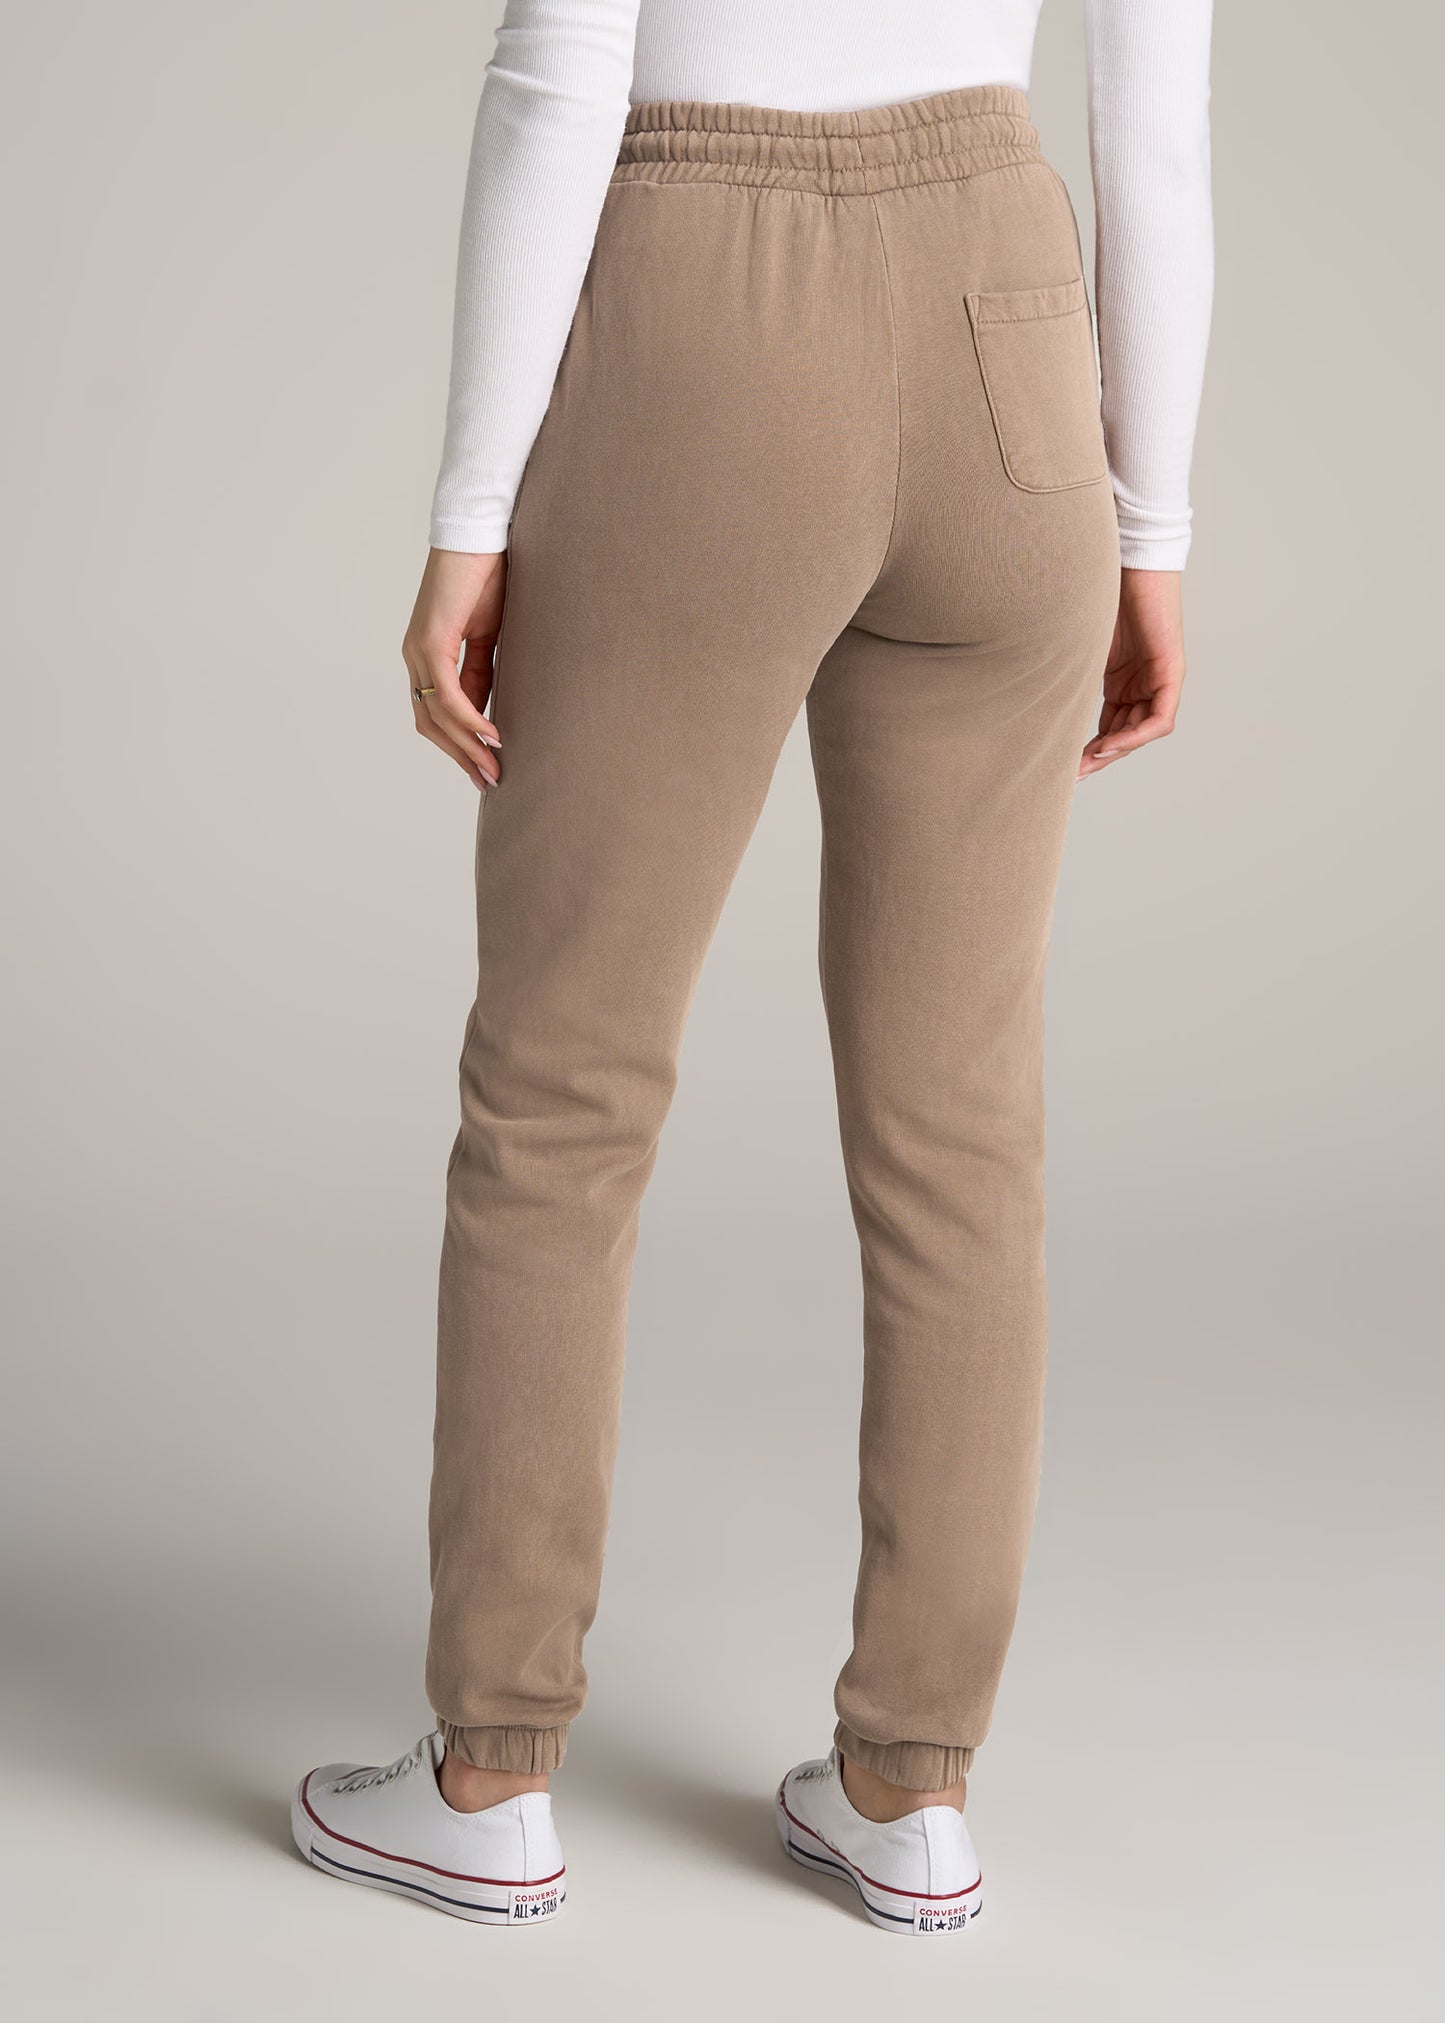 Women\'s Tall Wearever – High-Waisted Tall Latte American Garment-Dyed Sweatpants